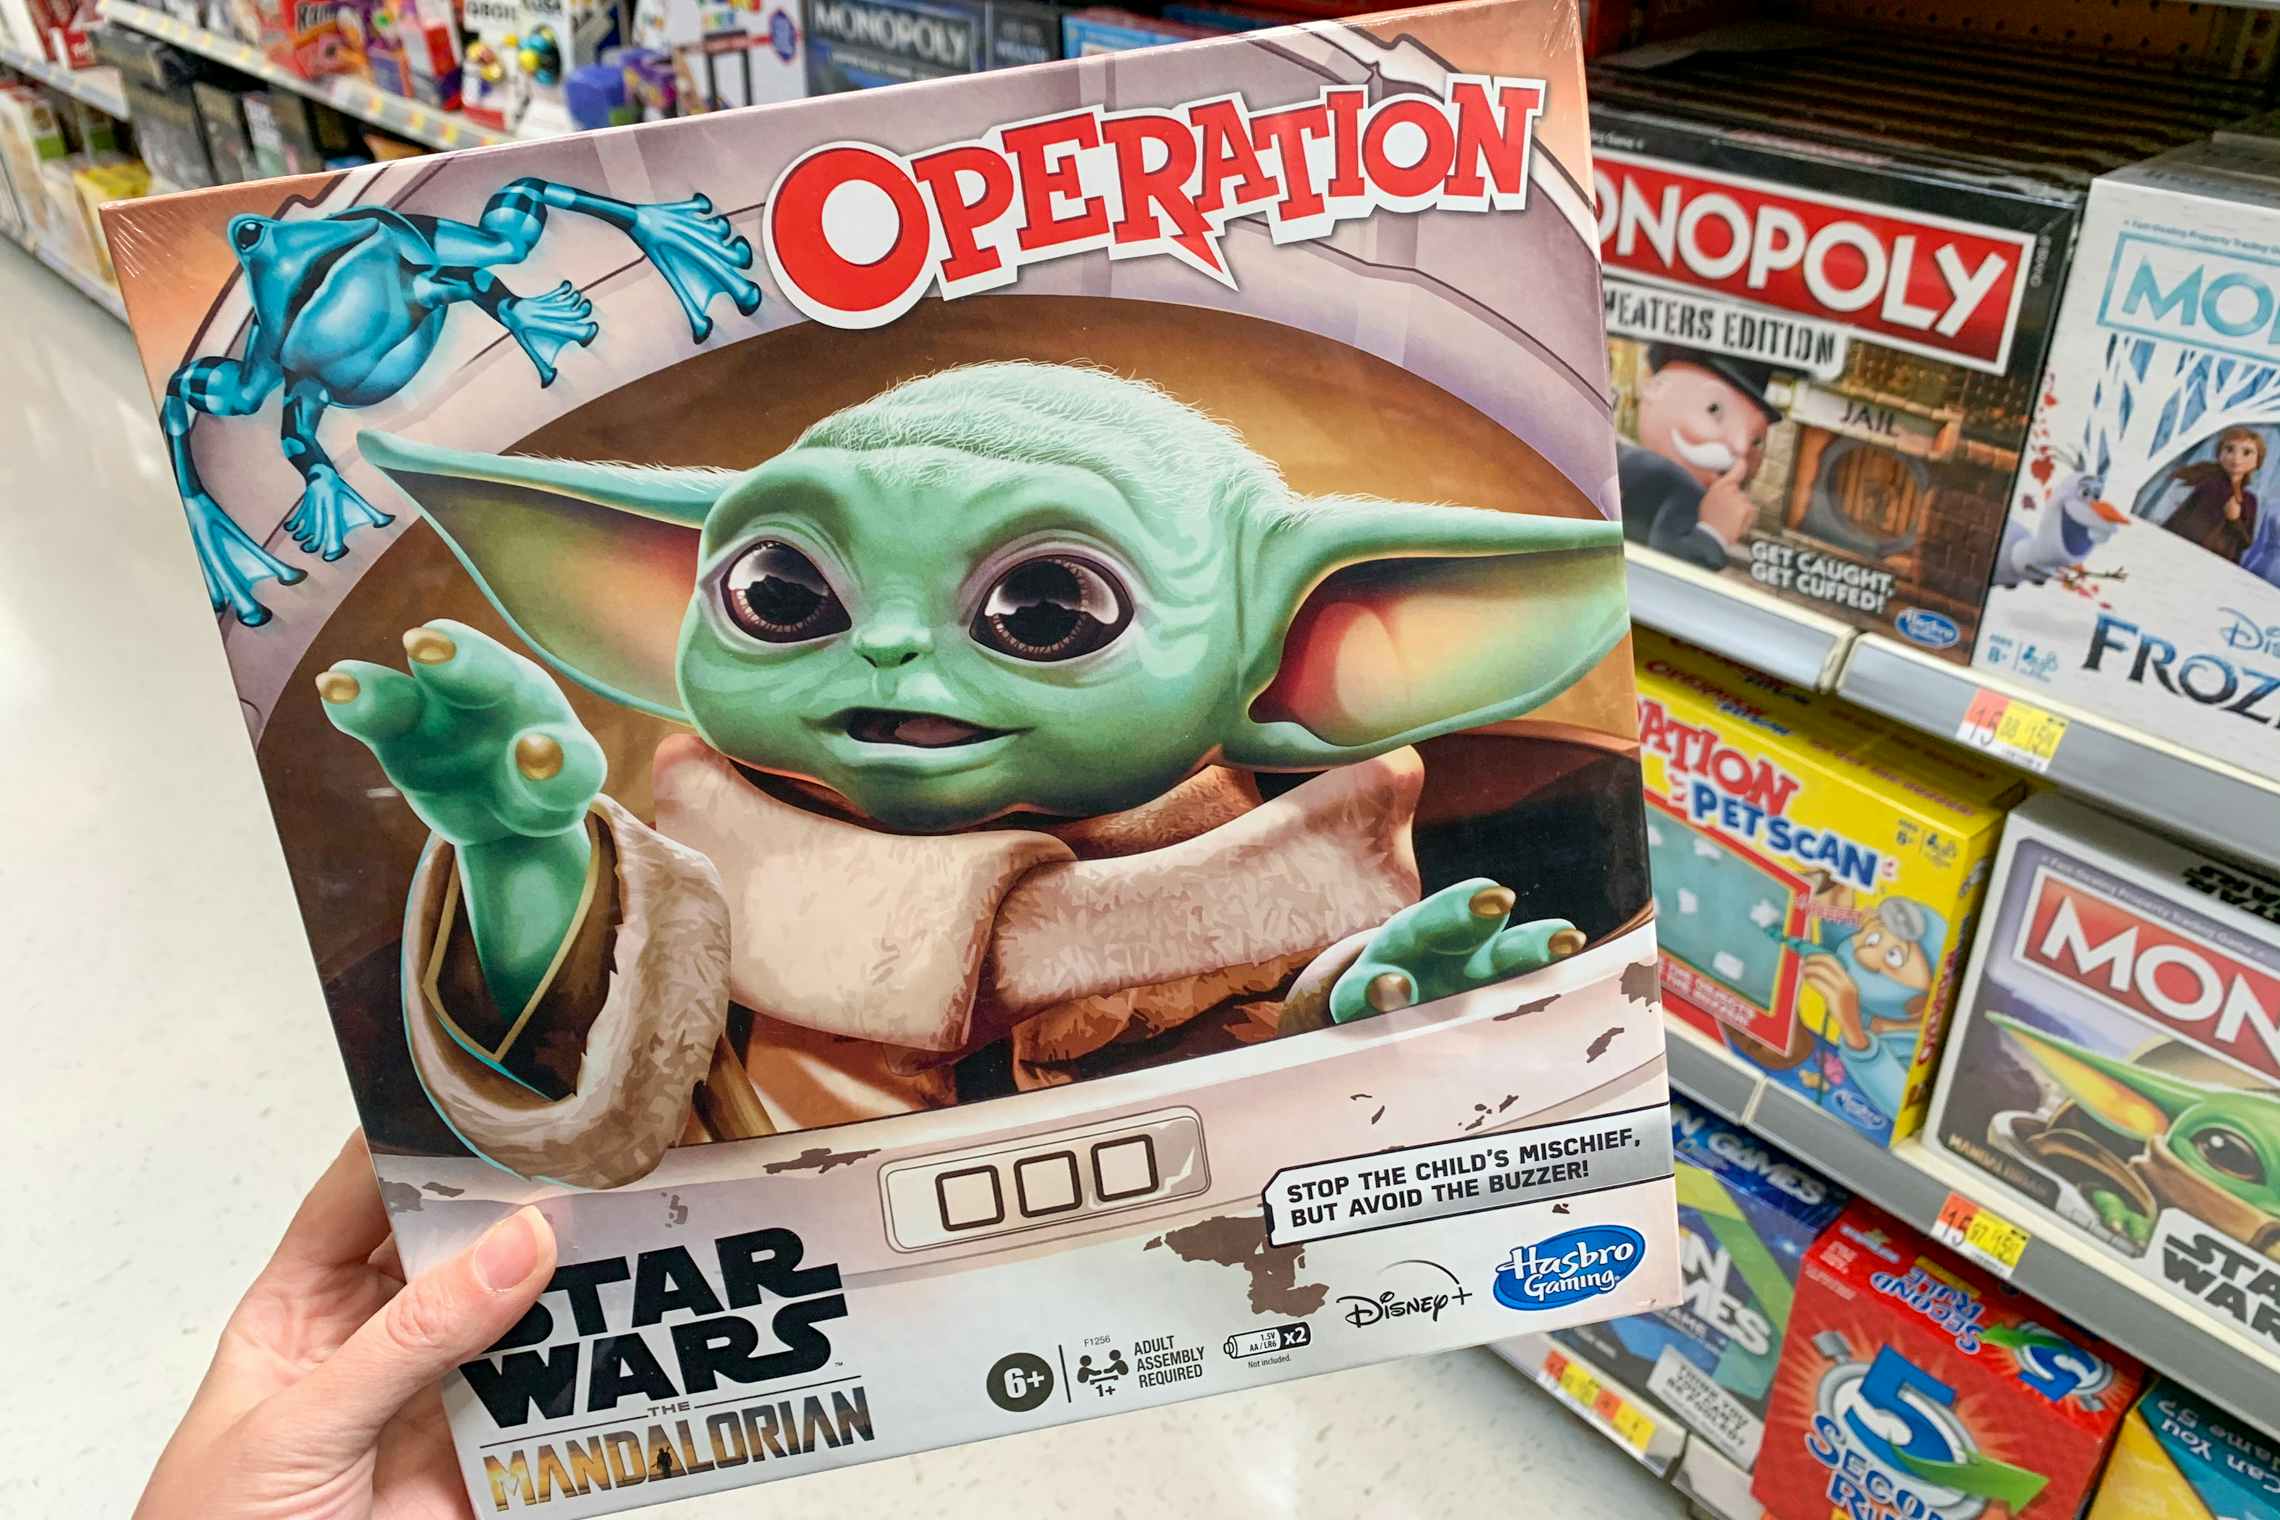 Star Wars Mandalorian Operation board game at Walmart